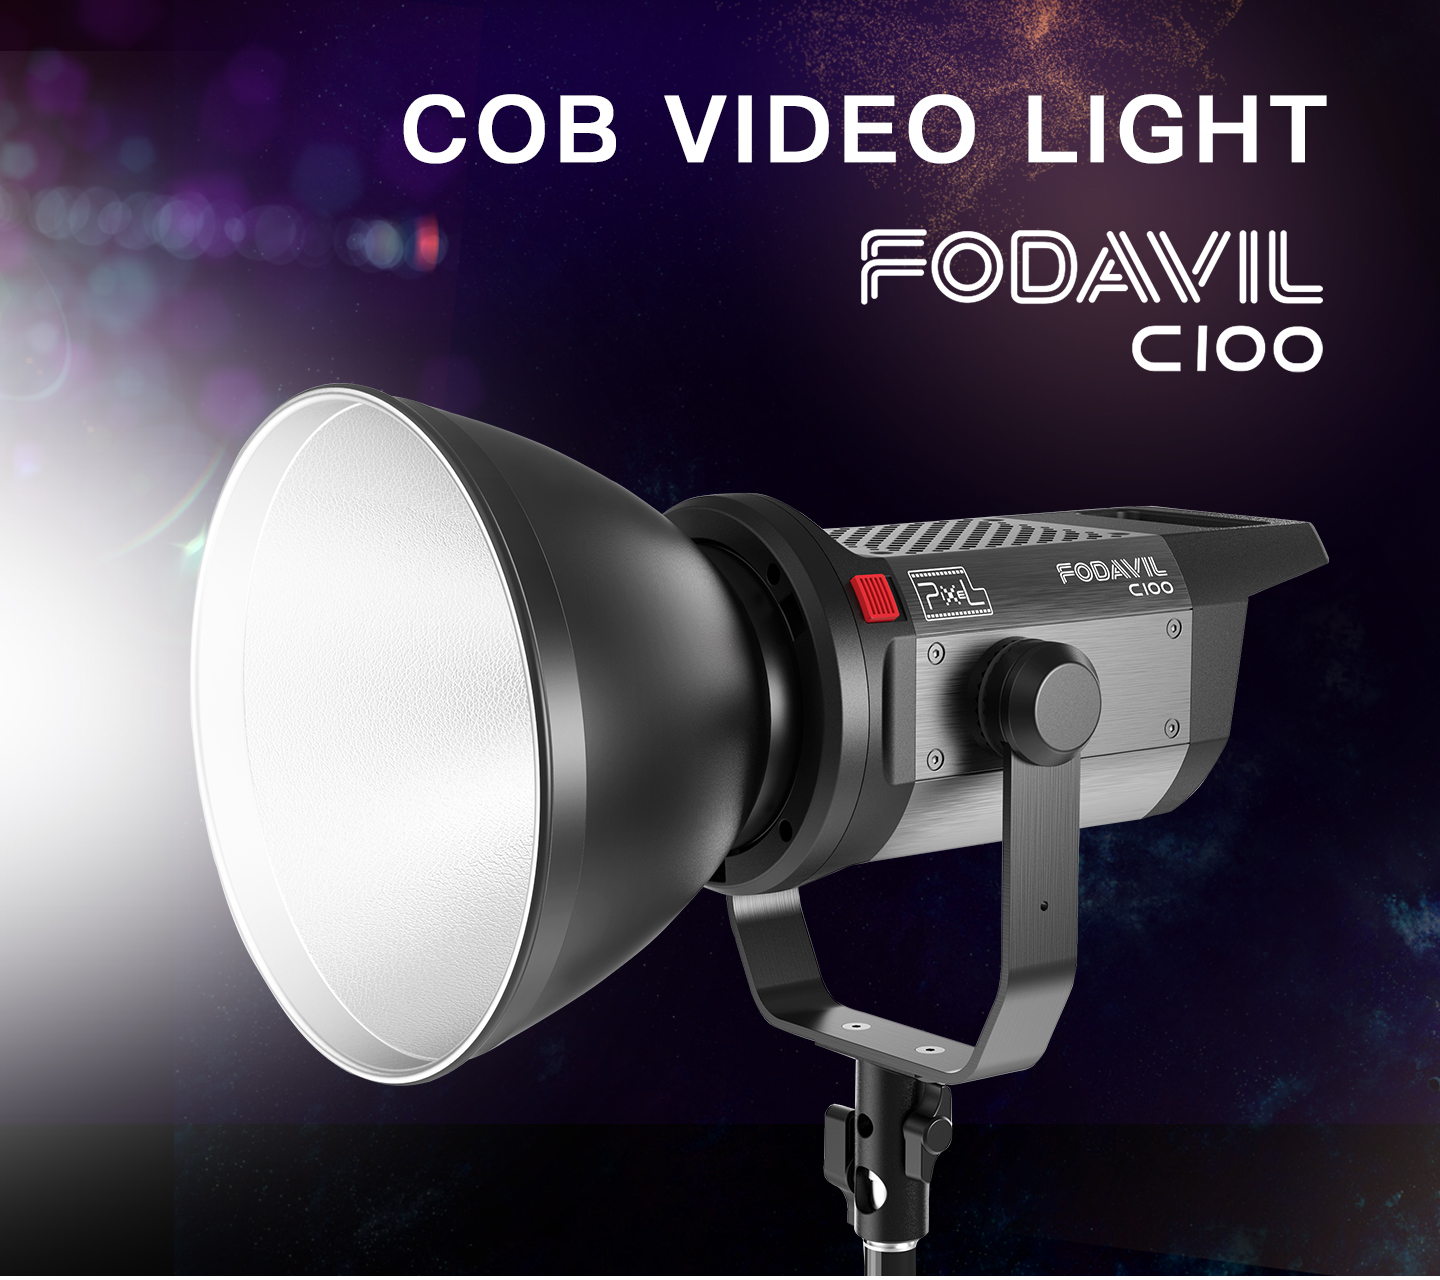 COB VIDEO LIGHT FODAVIL C100